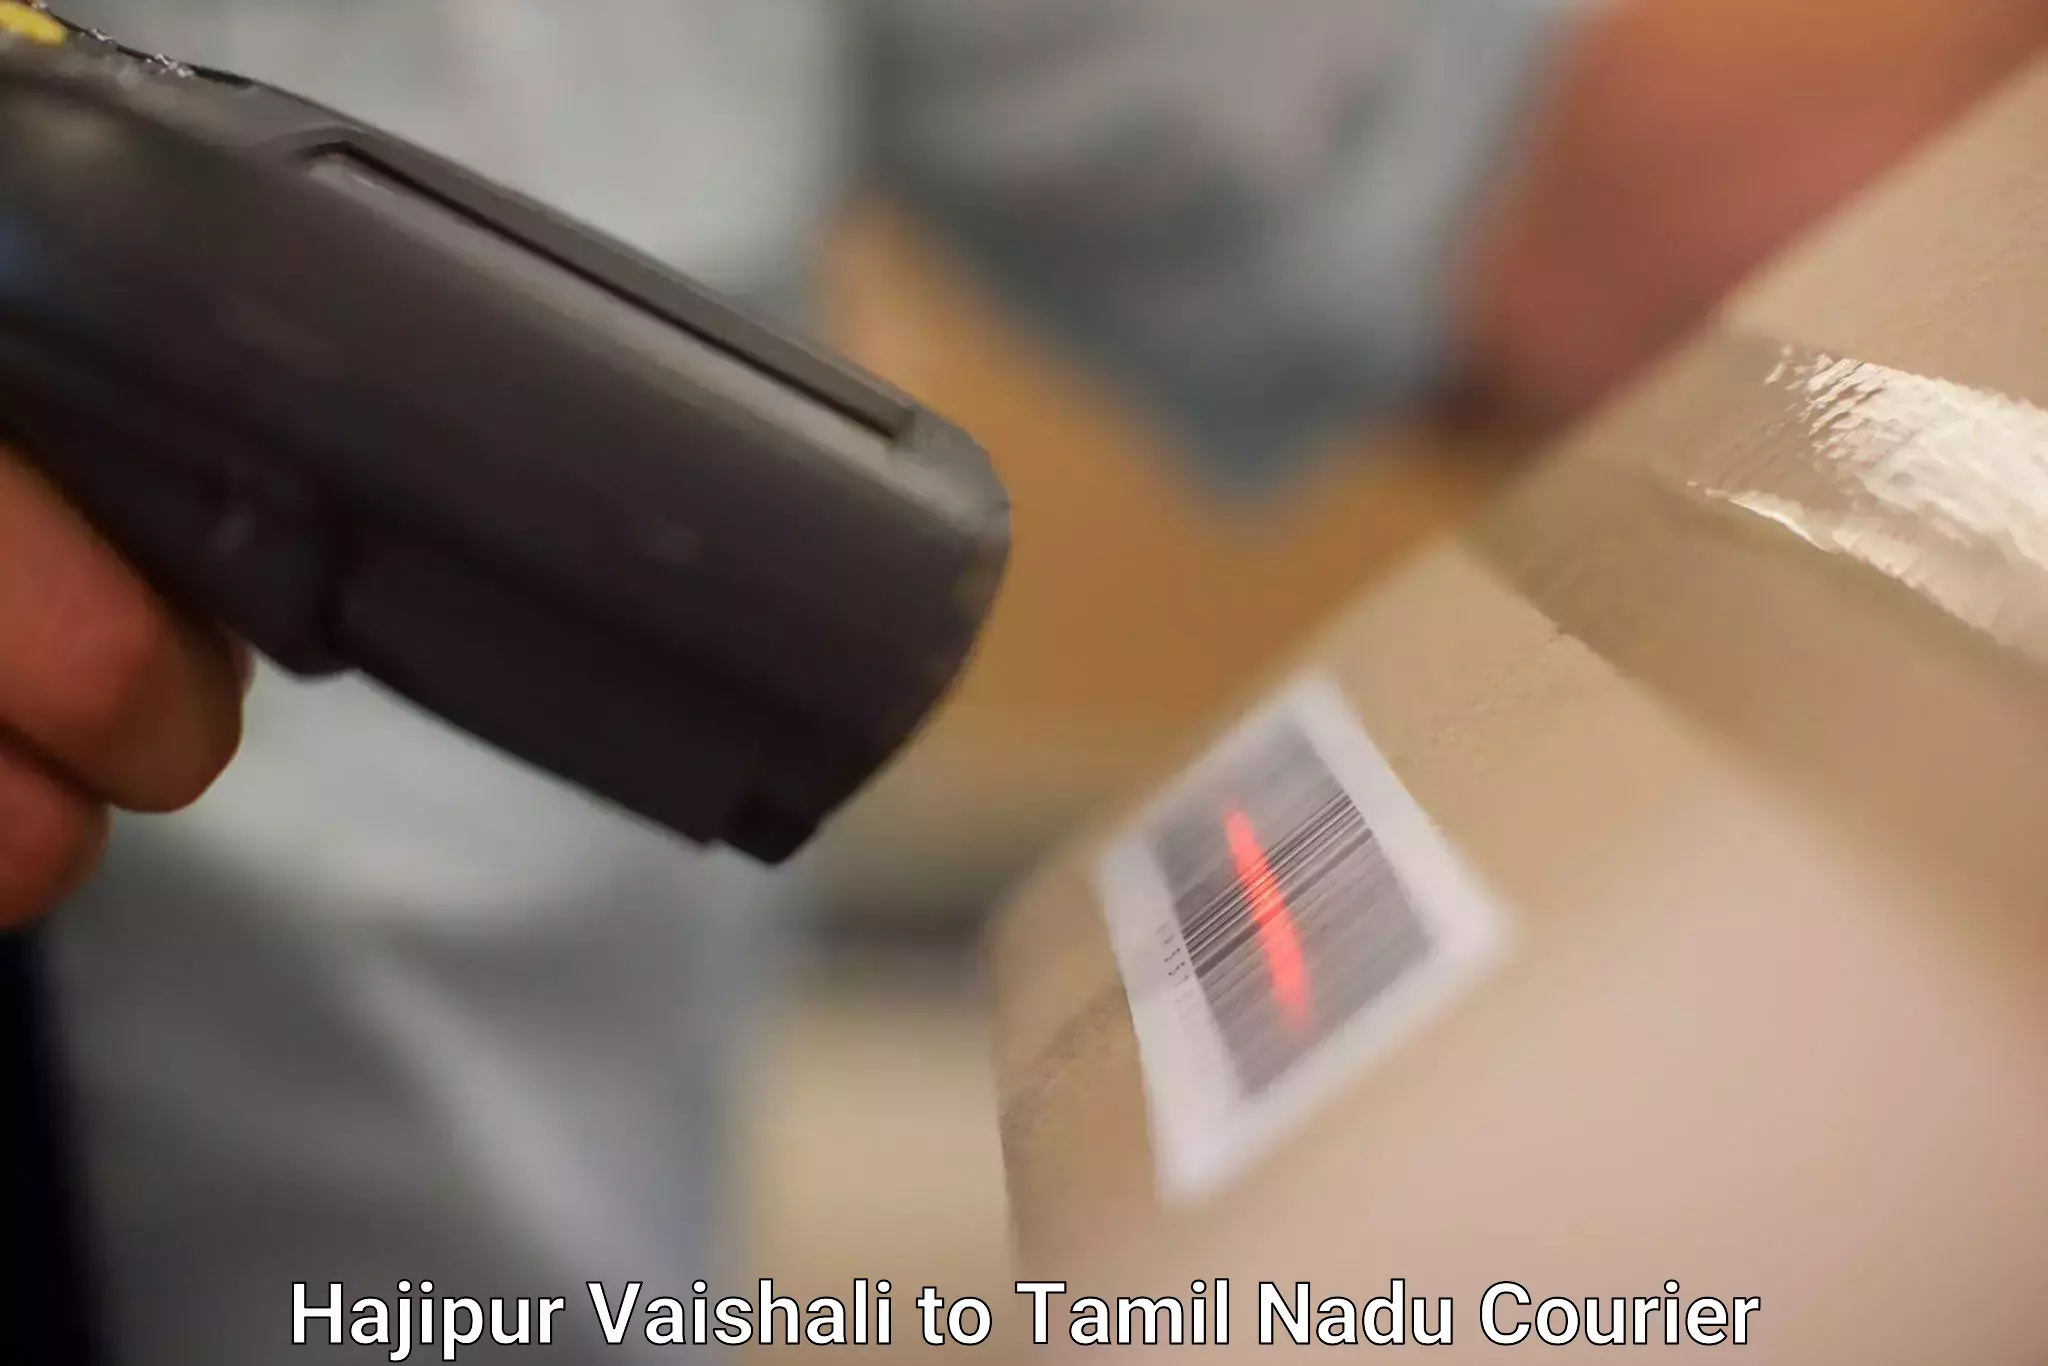 State-of-the-art courier technology Hajipur Vaishali to Tiruchengode